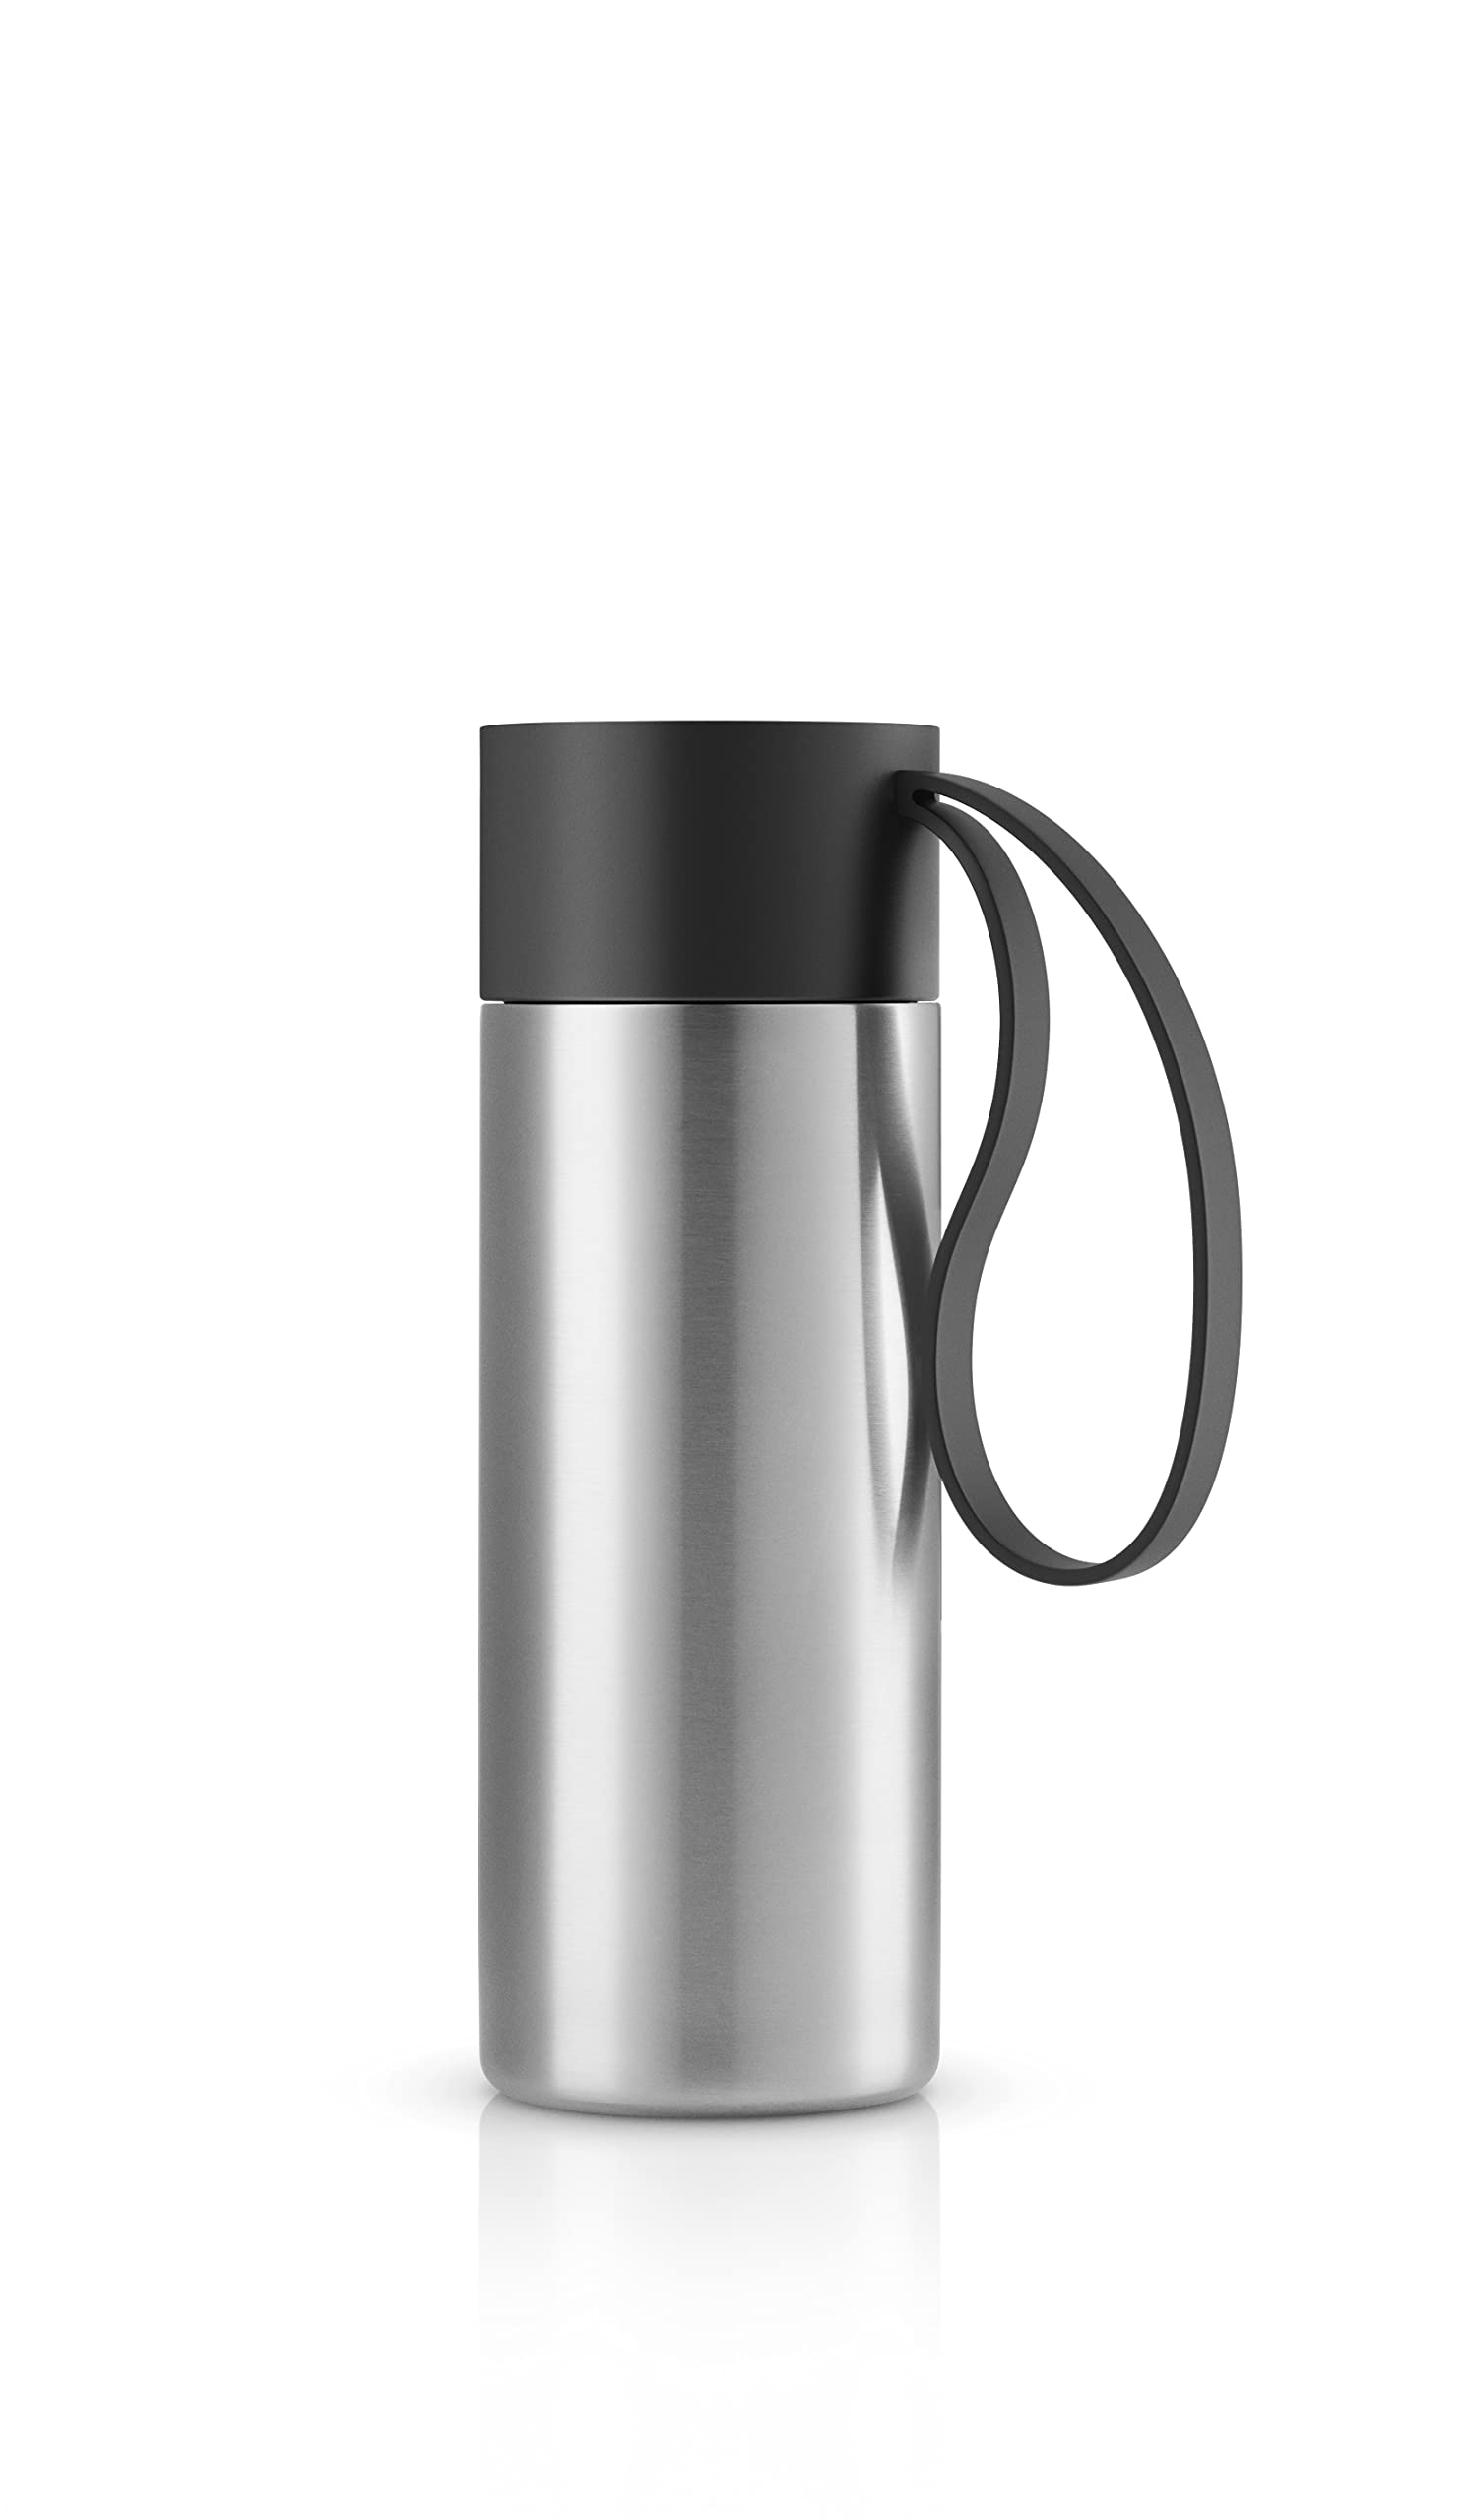 EVA SOLO 567467 Stainless Steel Insulated Mug 350 ml, Black, 20,7 x 7,8 x 7,8 cm | Danish Design, Functionality & Quality |